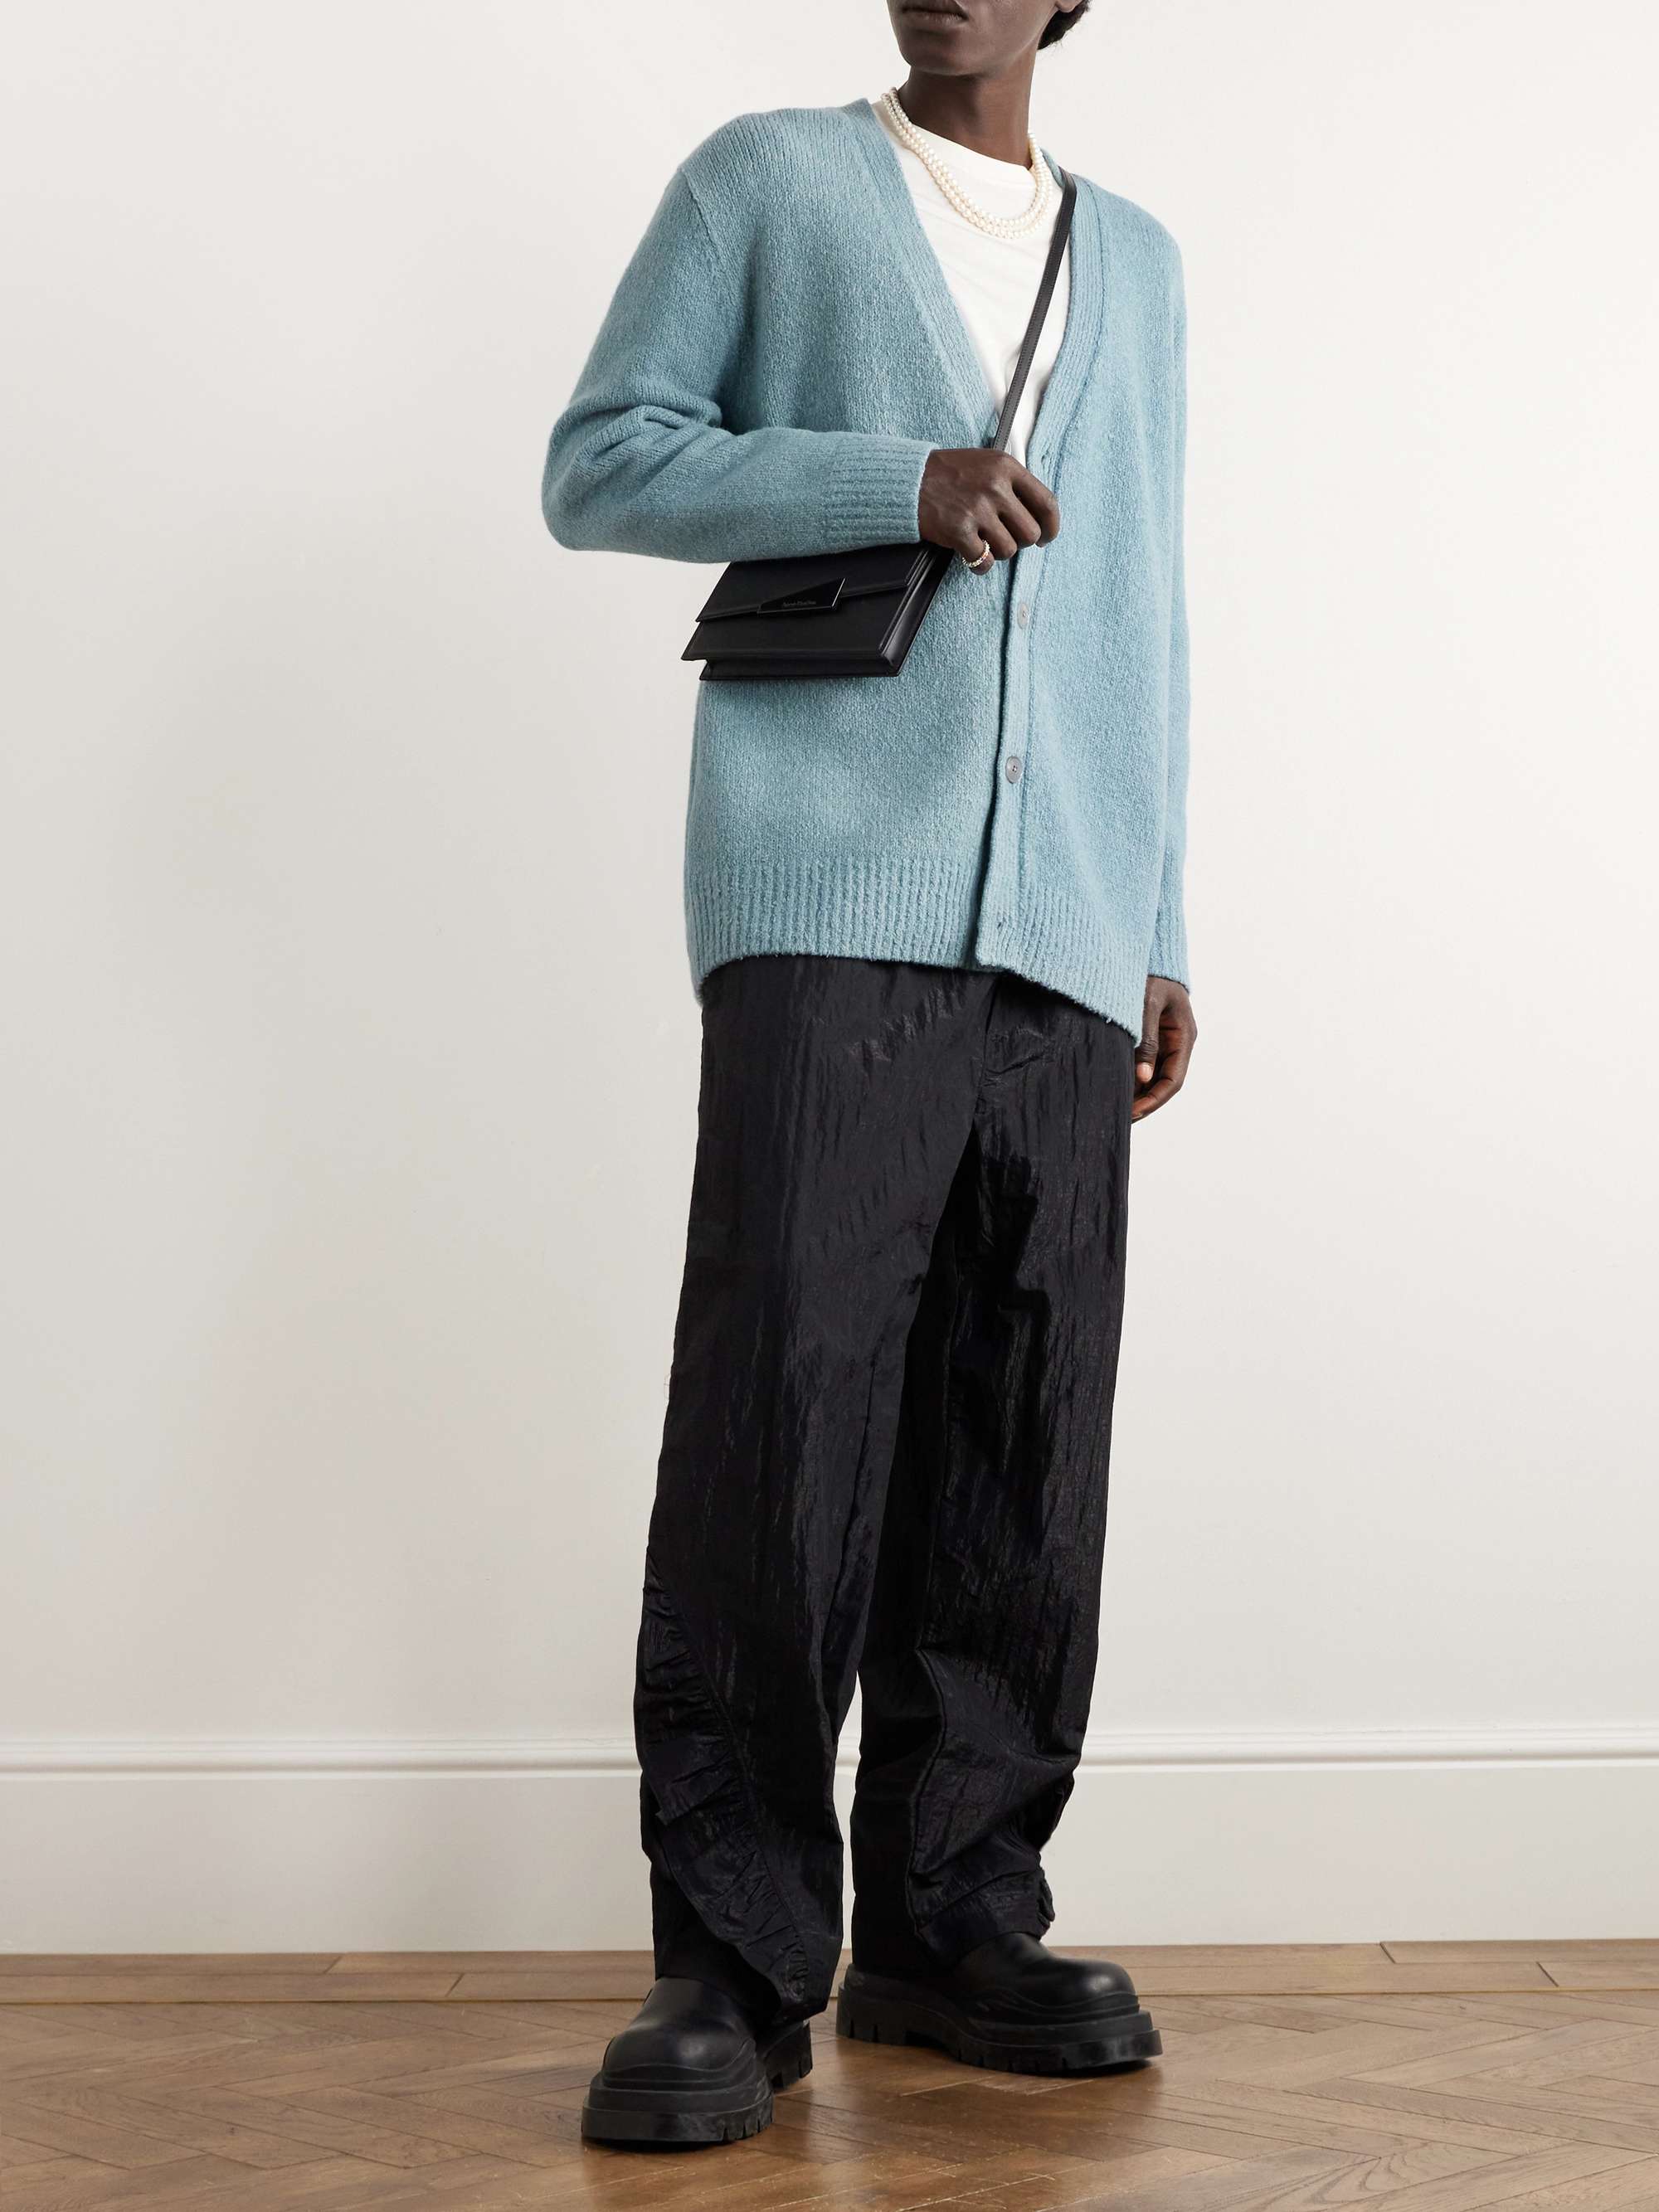 ACNE STUDIOS Korval Knitted Cardigan for Men | MR PORTER